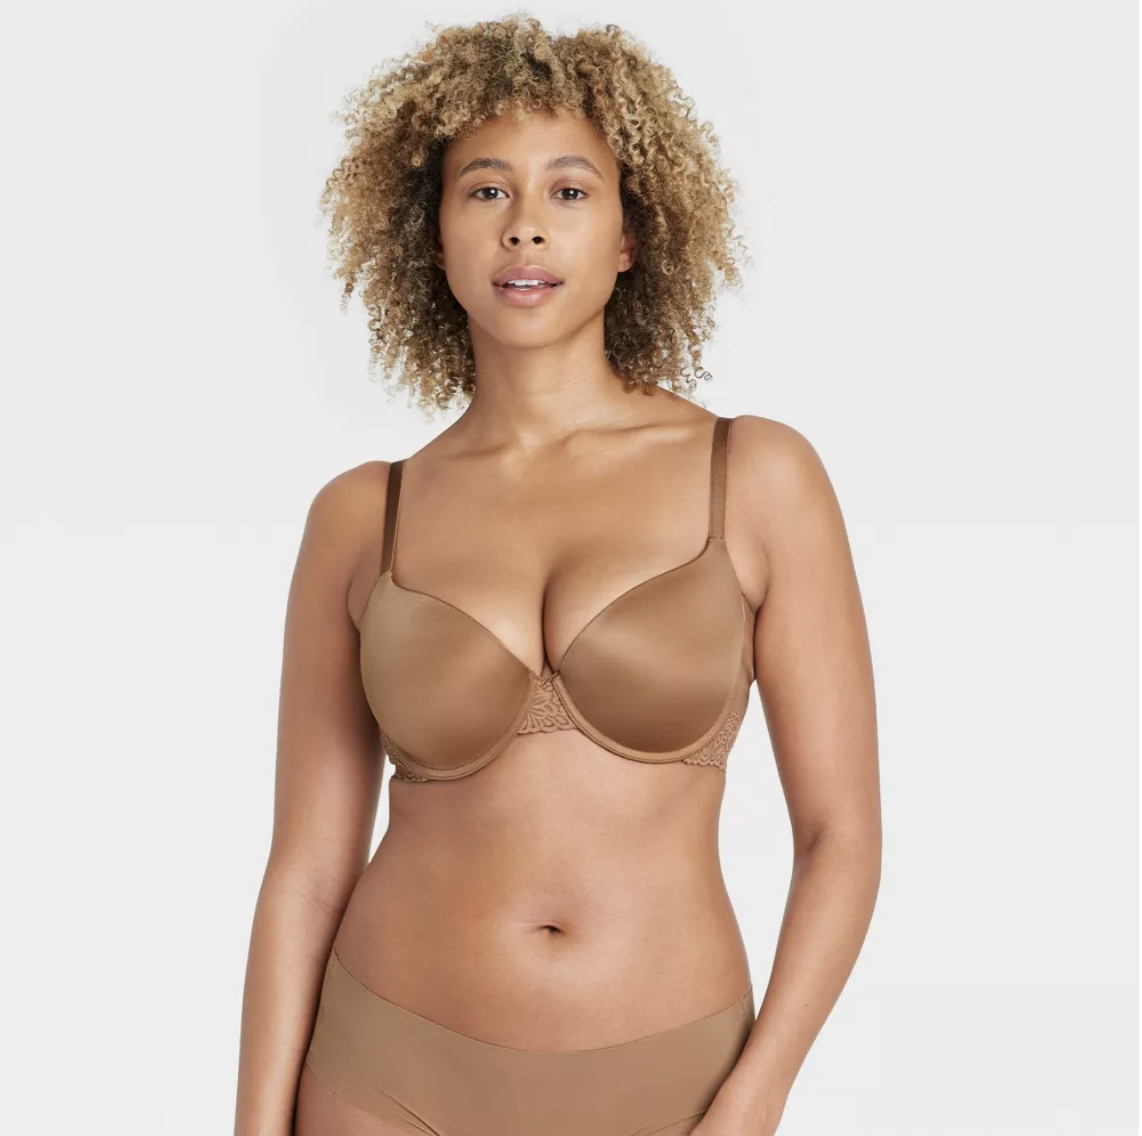 model wearing a light brown push up bra